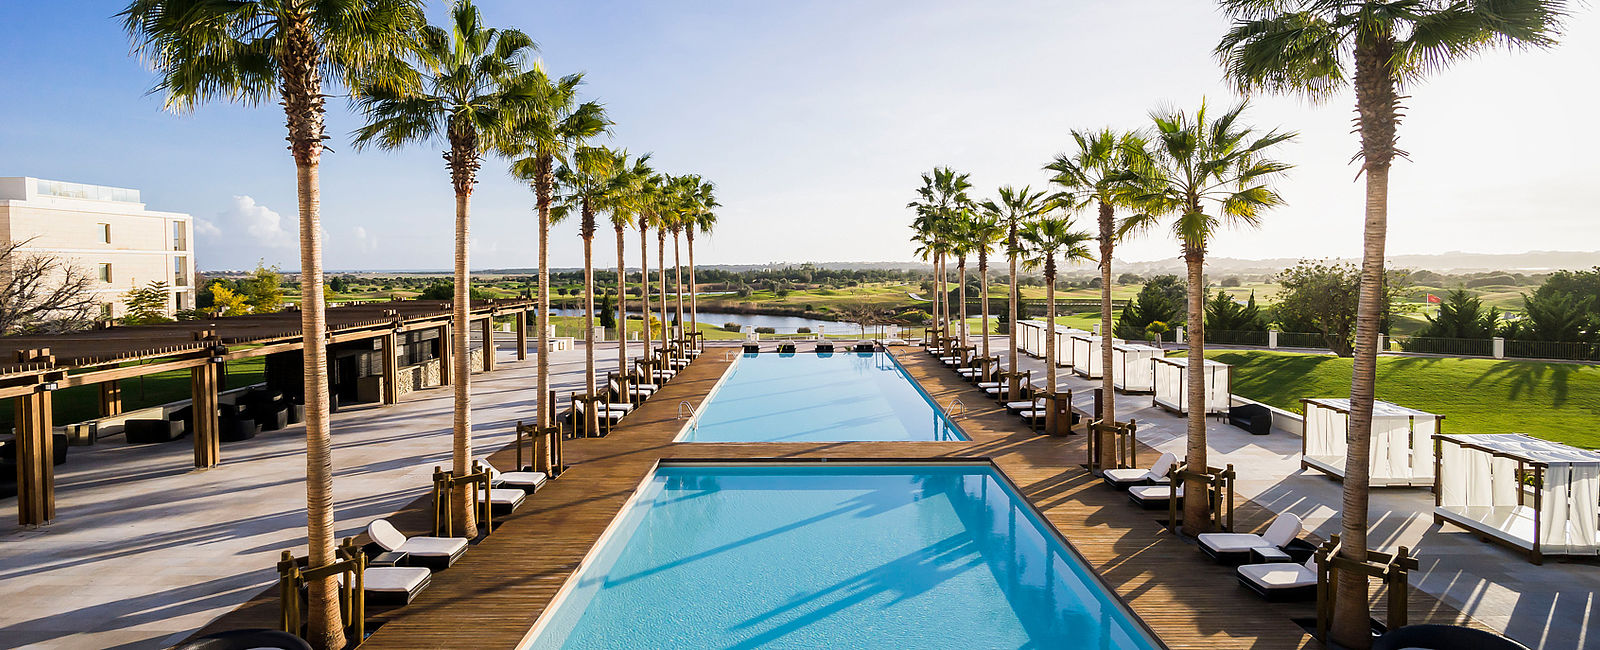 HOTELTEST
 Anantara Vilamoura Algarve Resort 
 Von Asien an die Algarve 